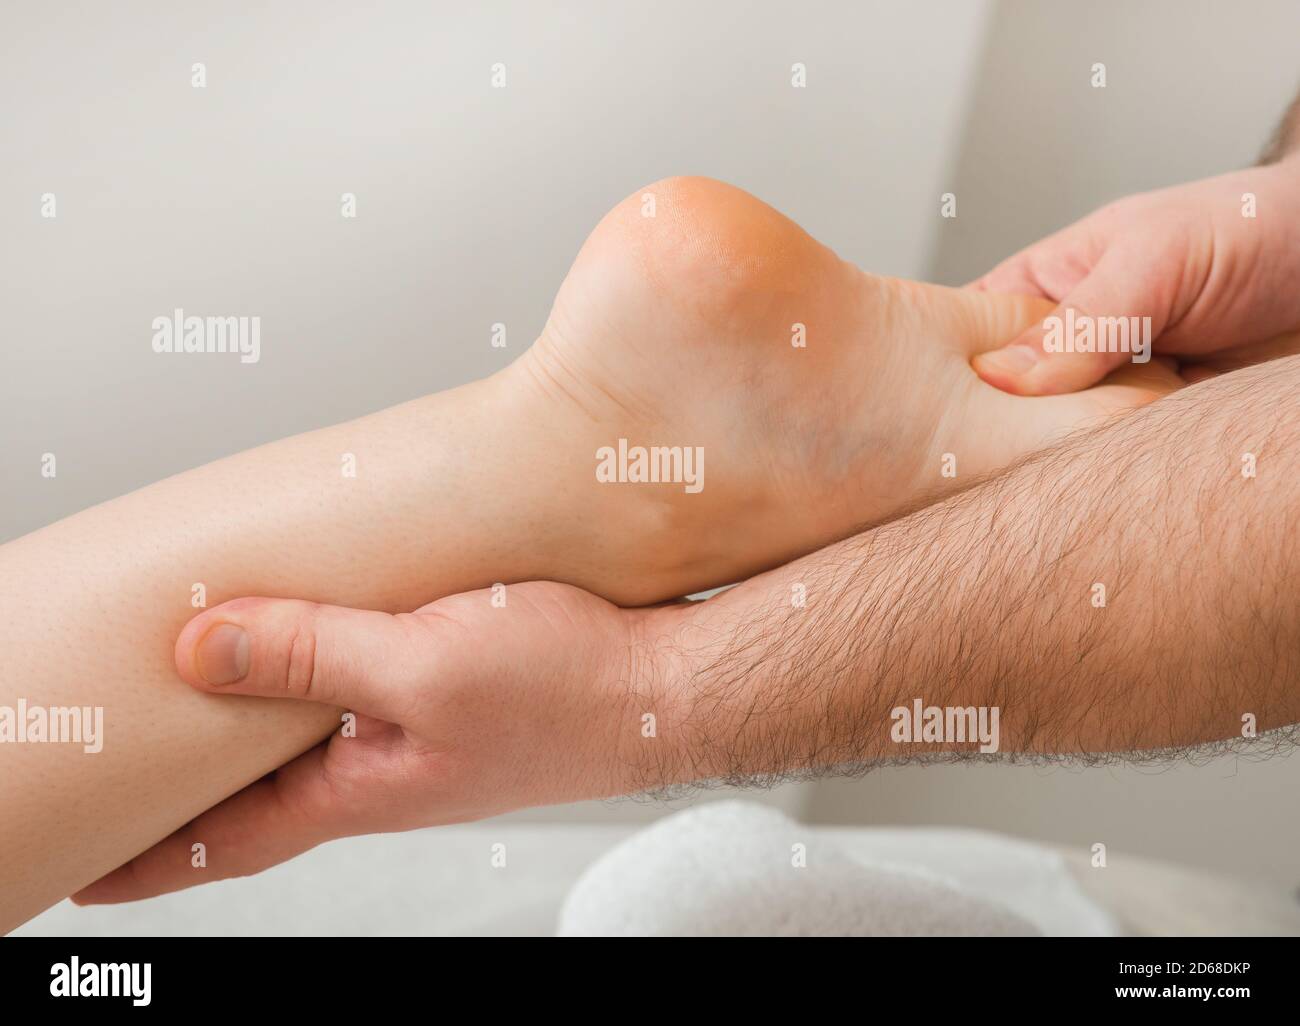 Relaxed foot massage, reflexology. Women getting foot massage, close-up Stock Photo